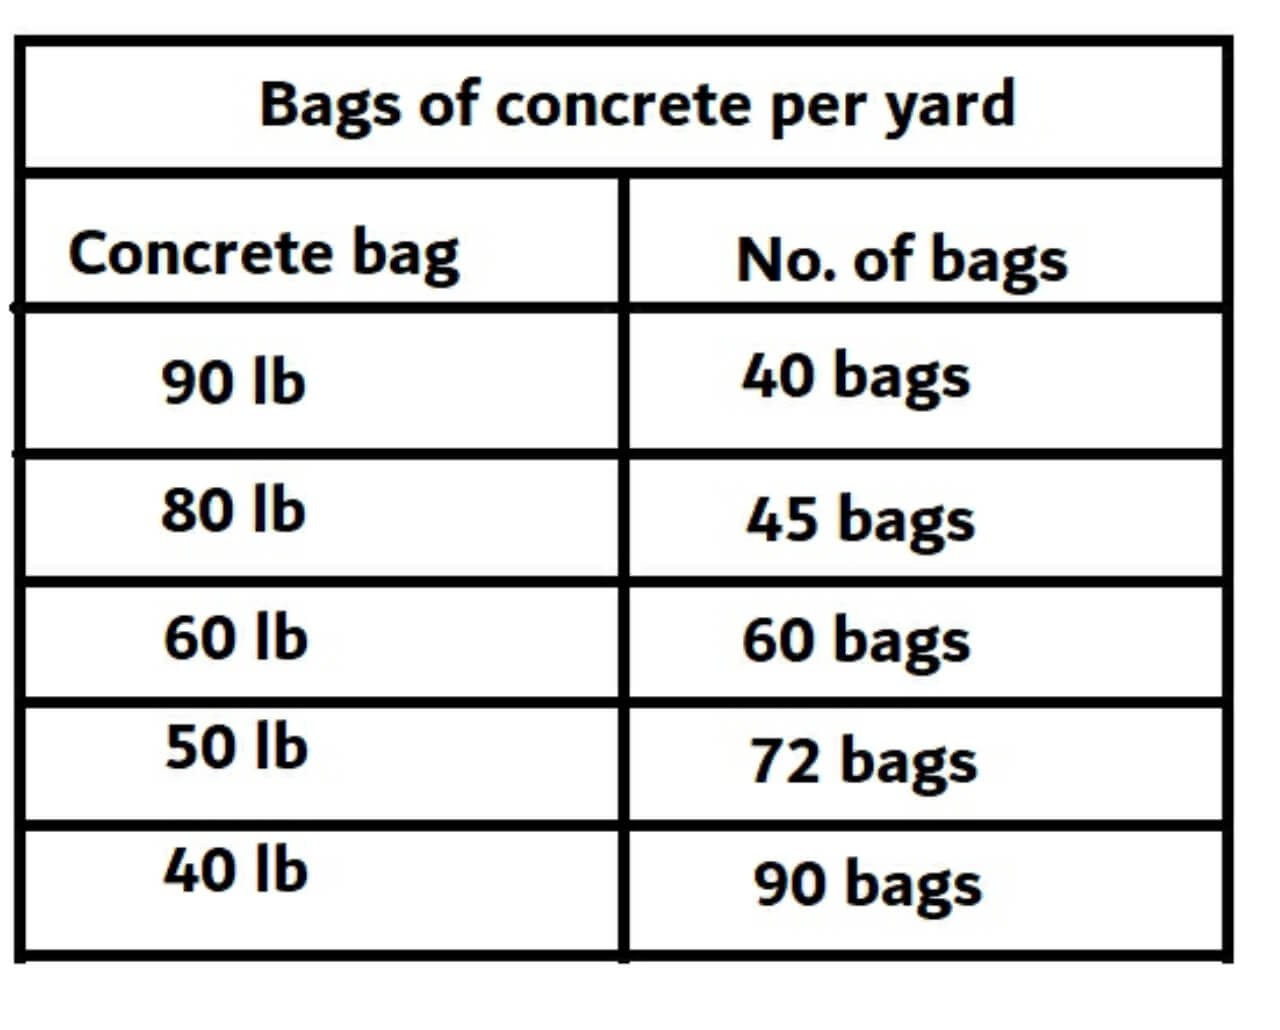 Bags of concrete per yard